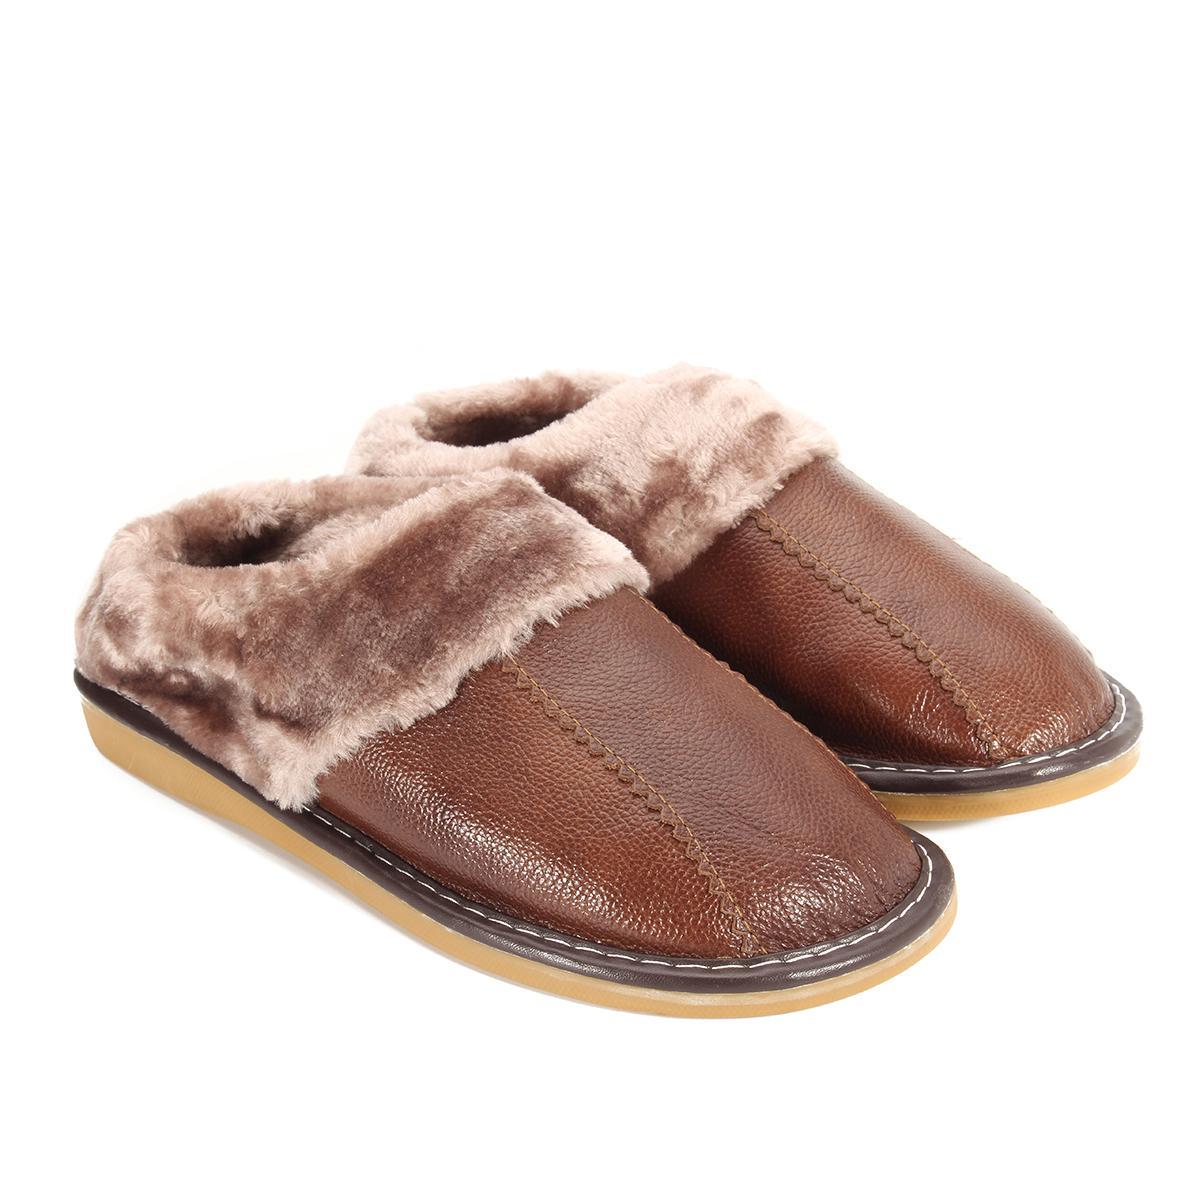 warm fuzzy house slippers